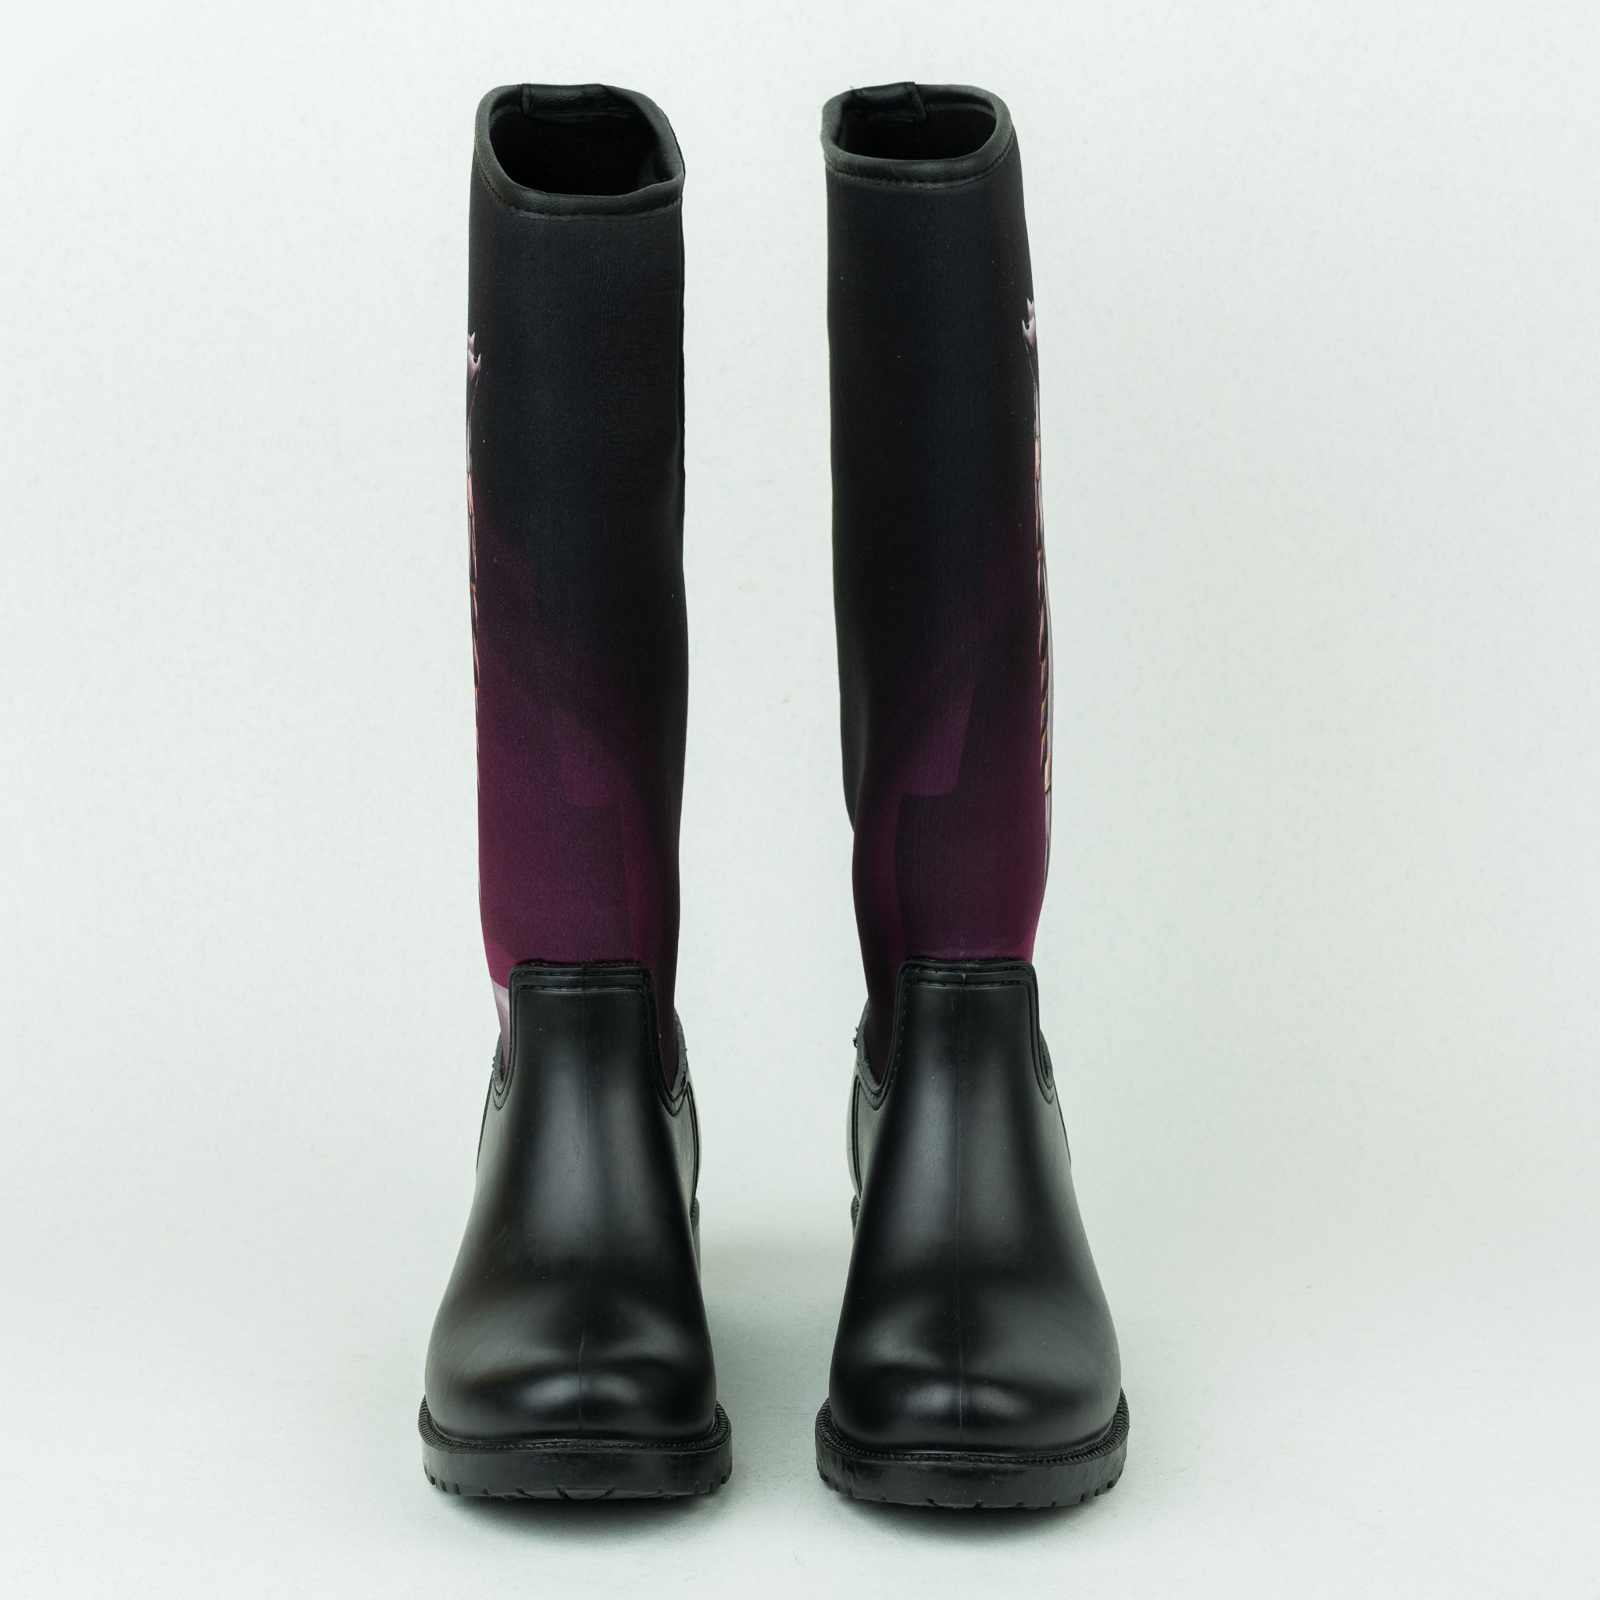 Waterproof boots B383 - BLACK